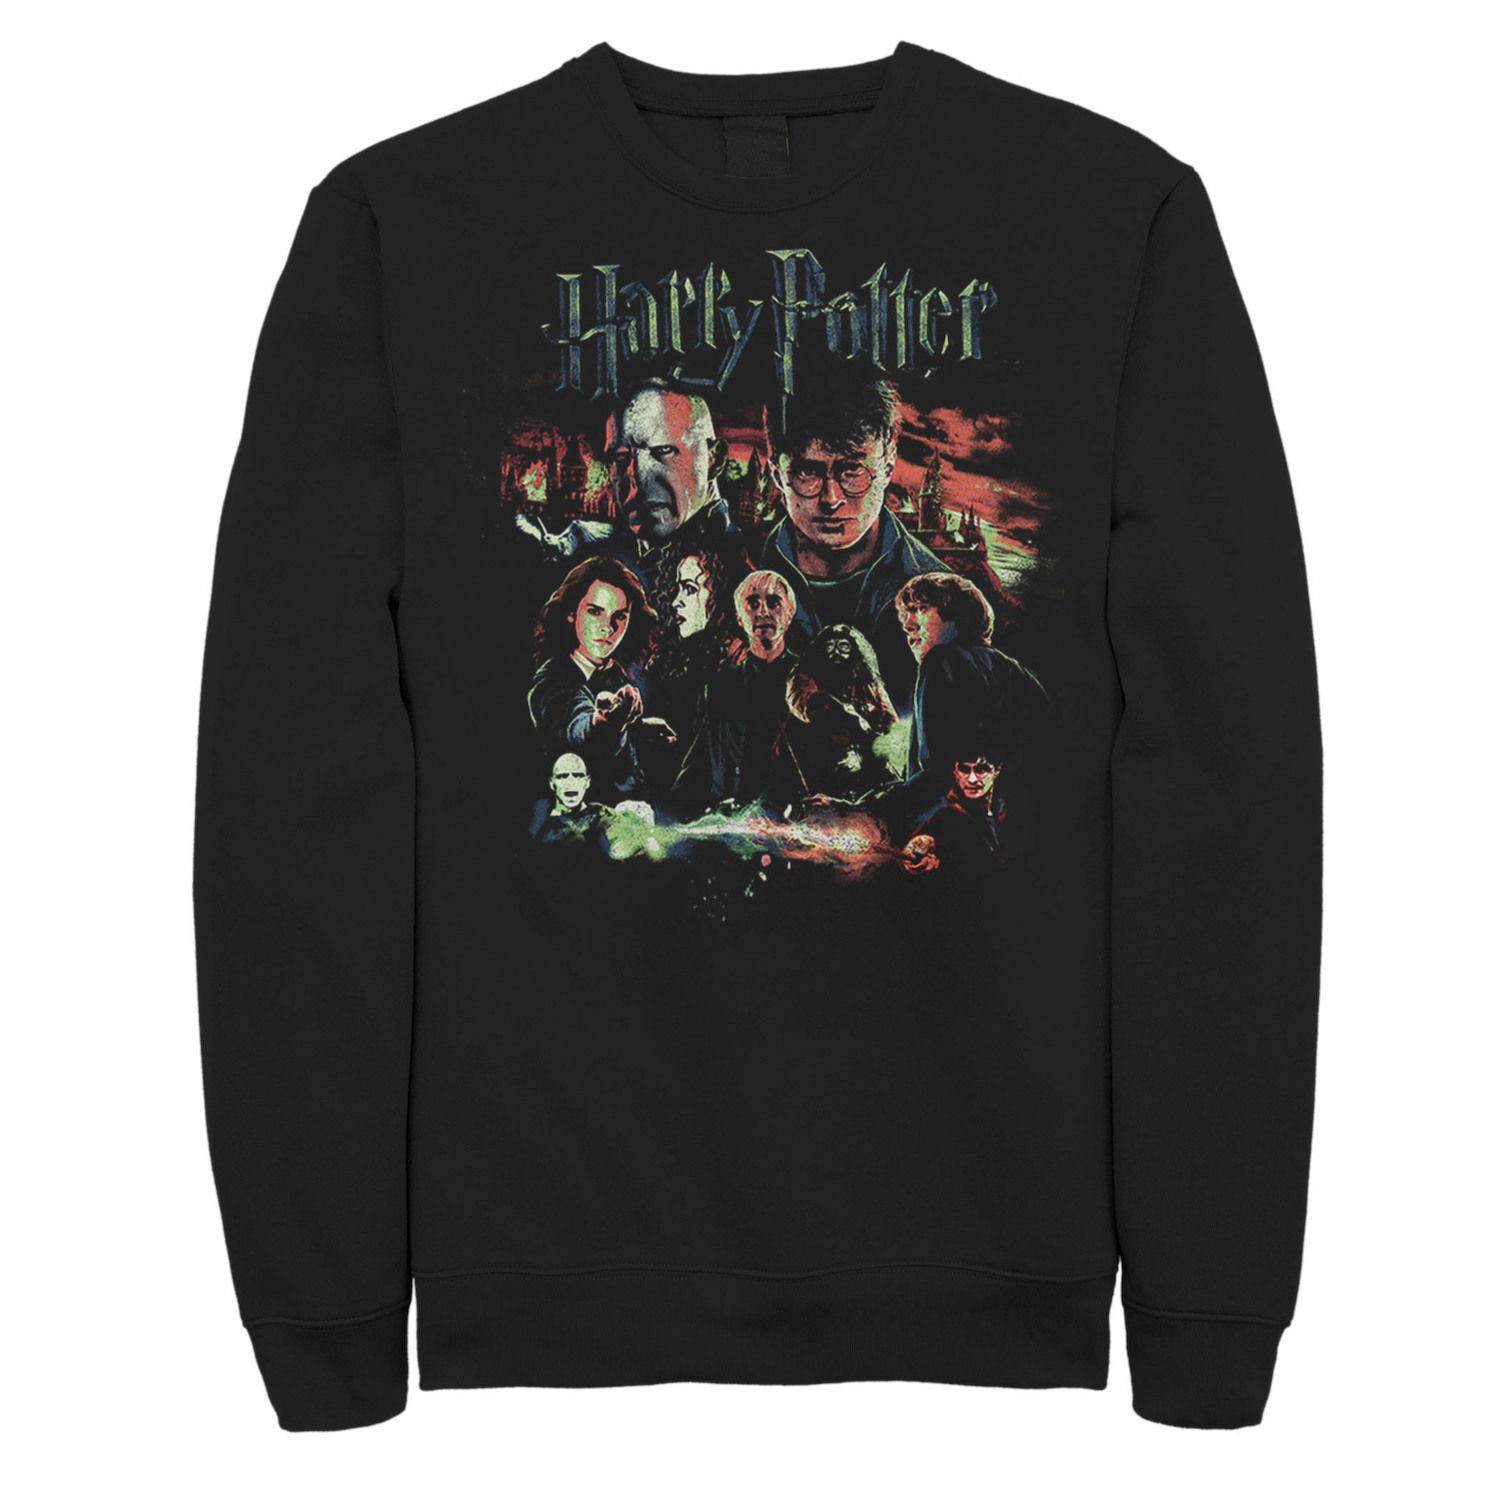 Image for Harry Potter Men's Hogwarts Lineup Poster Sweatshirt at Kohl's.